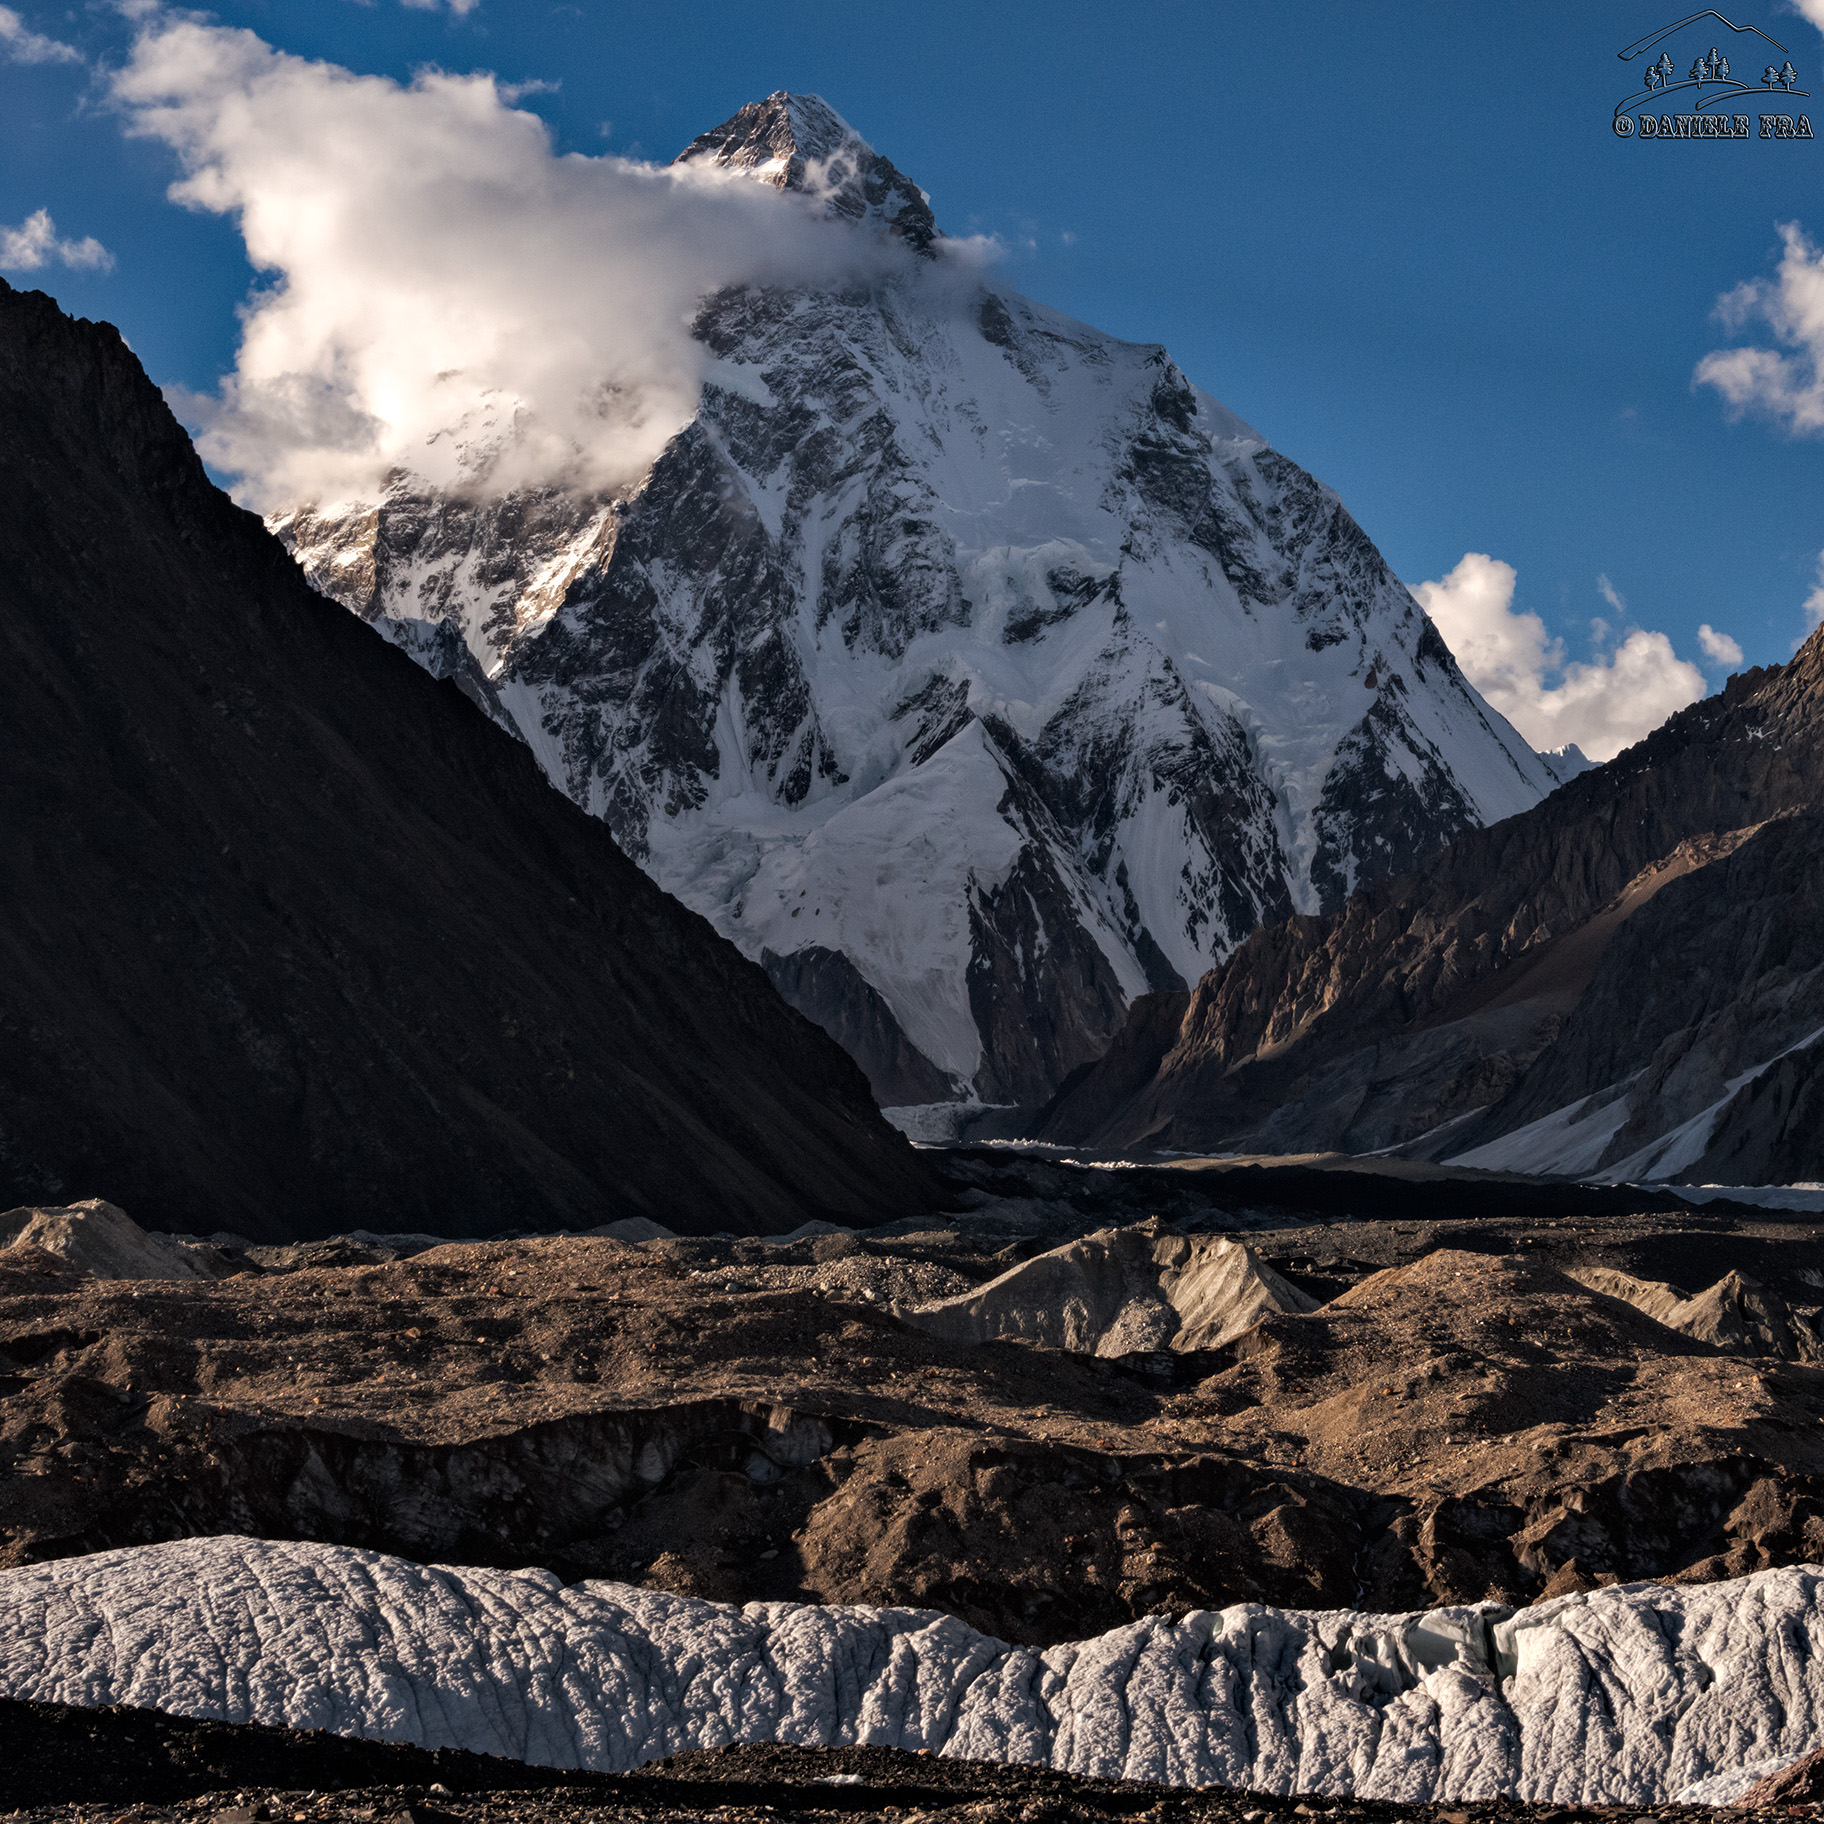 K2 8611m with Godwin Austen Glacier...